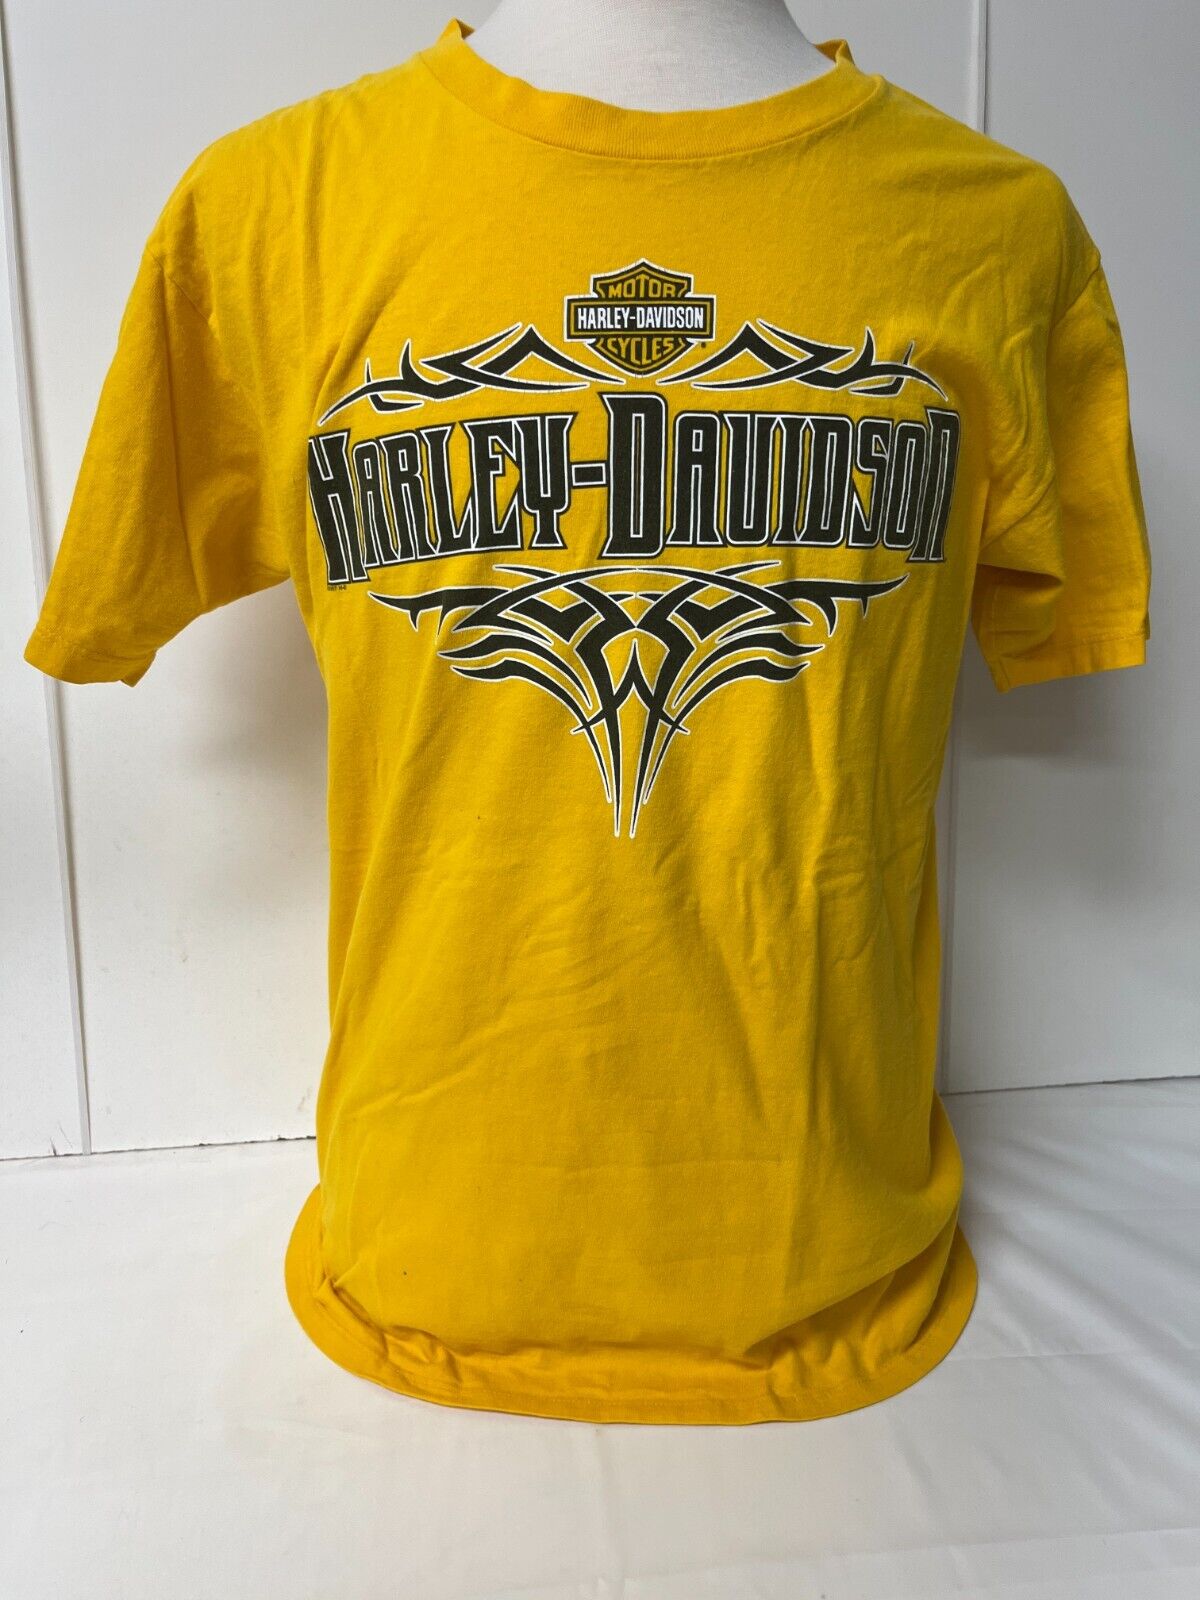 T-Shirt Harley Davidson Sz L Ft. Walton Beach FL 2007 Heritage Cycles Yellow